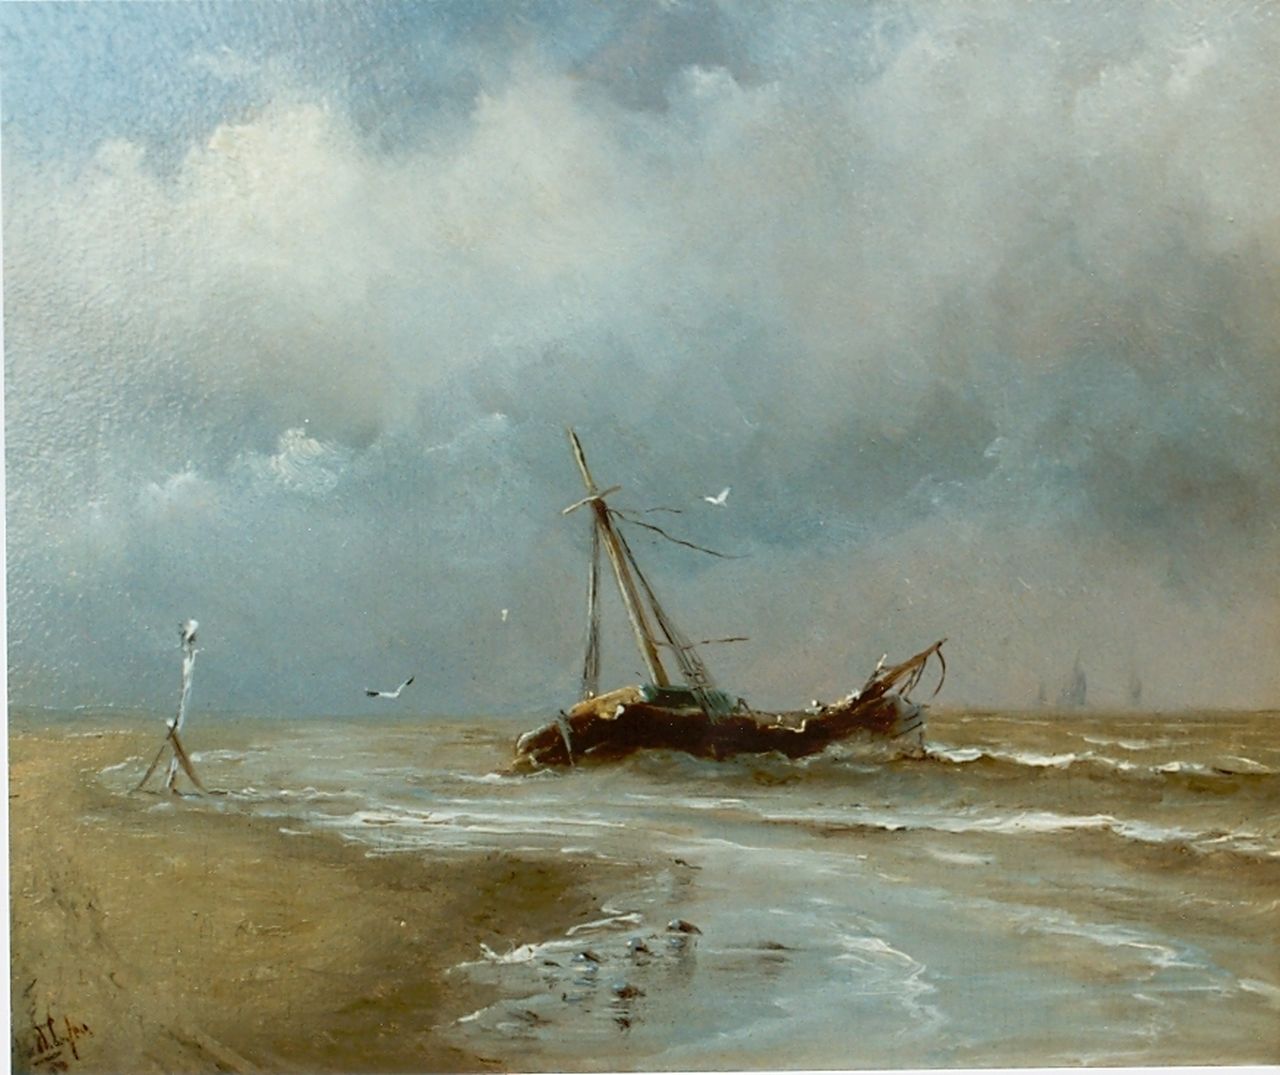 Laan G. van der | Gerard van der Laan, Shipwreck, oil on panel 15.0 x 17.7 cm, signed l.l. and dated '80